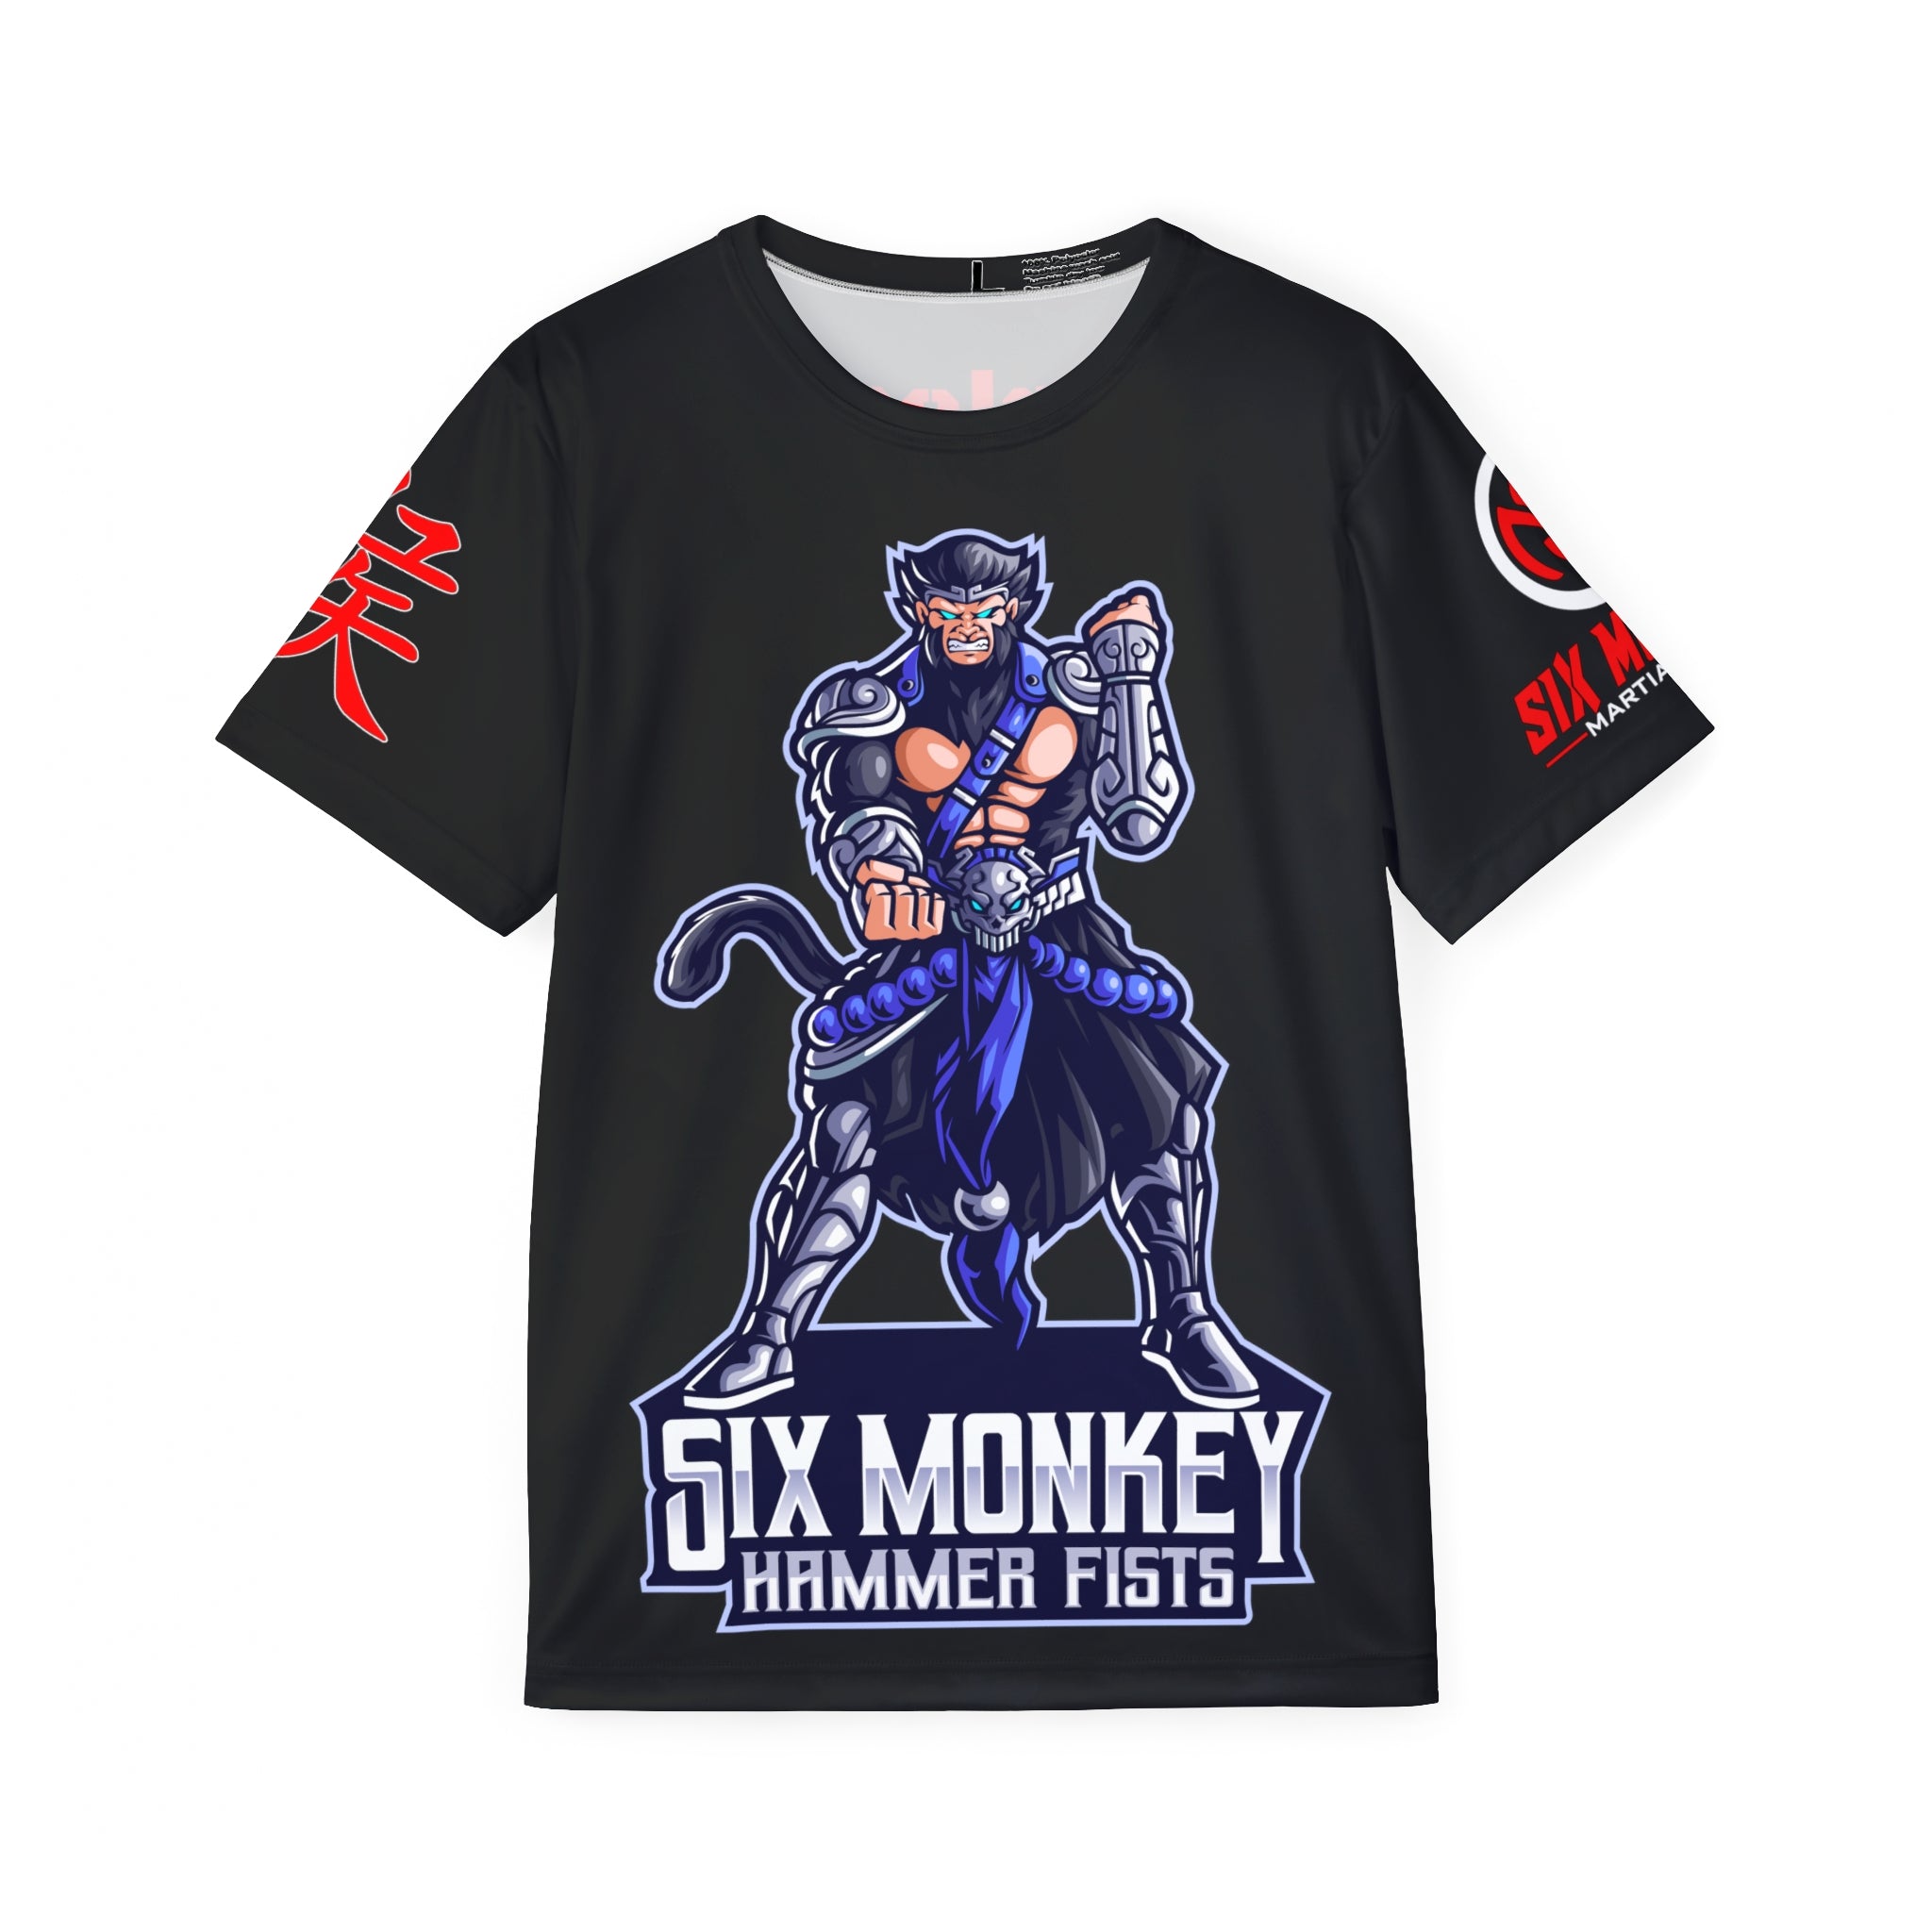 Six Monkey Hammer Fists Monkey Jersey